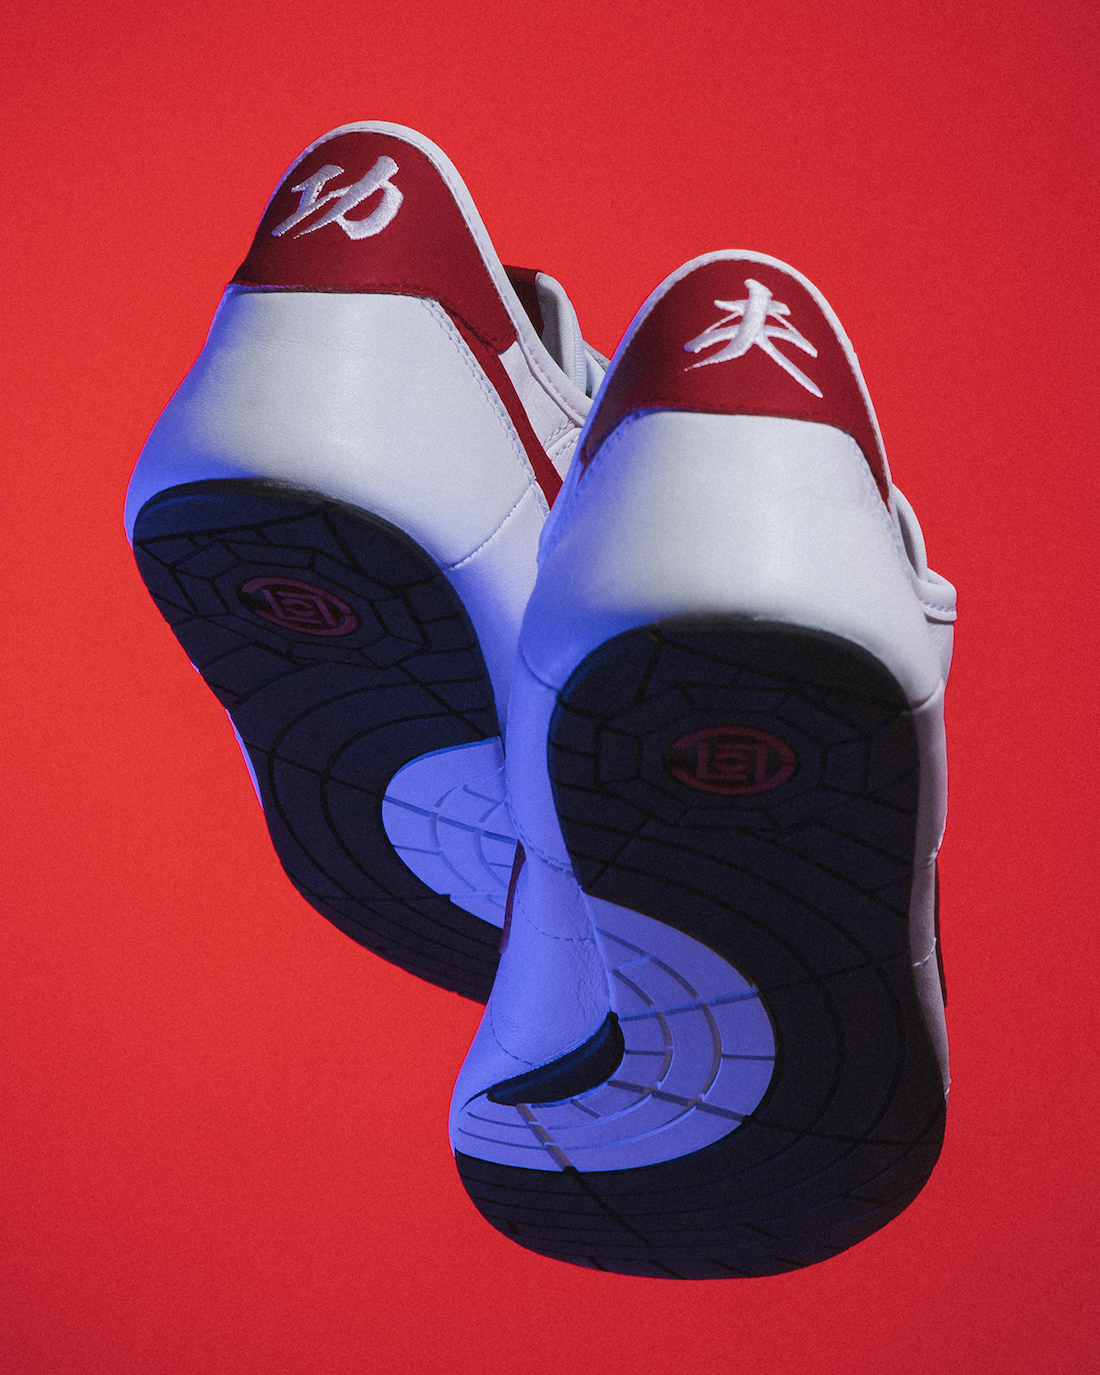 CLOT Nike Cortez White Blue Red DZ3239 100 Release Date 2